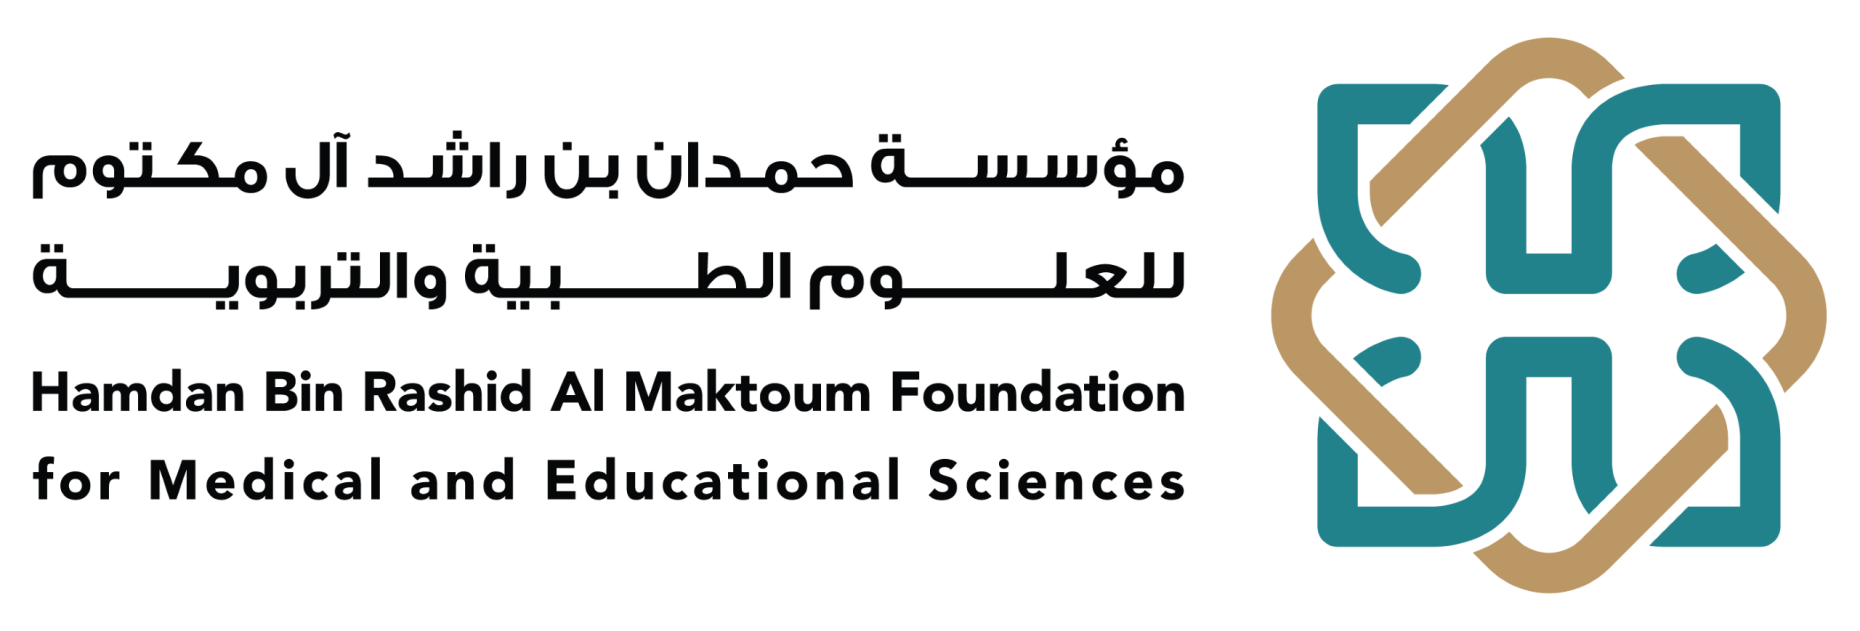 Hamdan Bin Rashid Al Maktoum Foundation for Distinguished Academic Performance